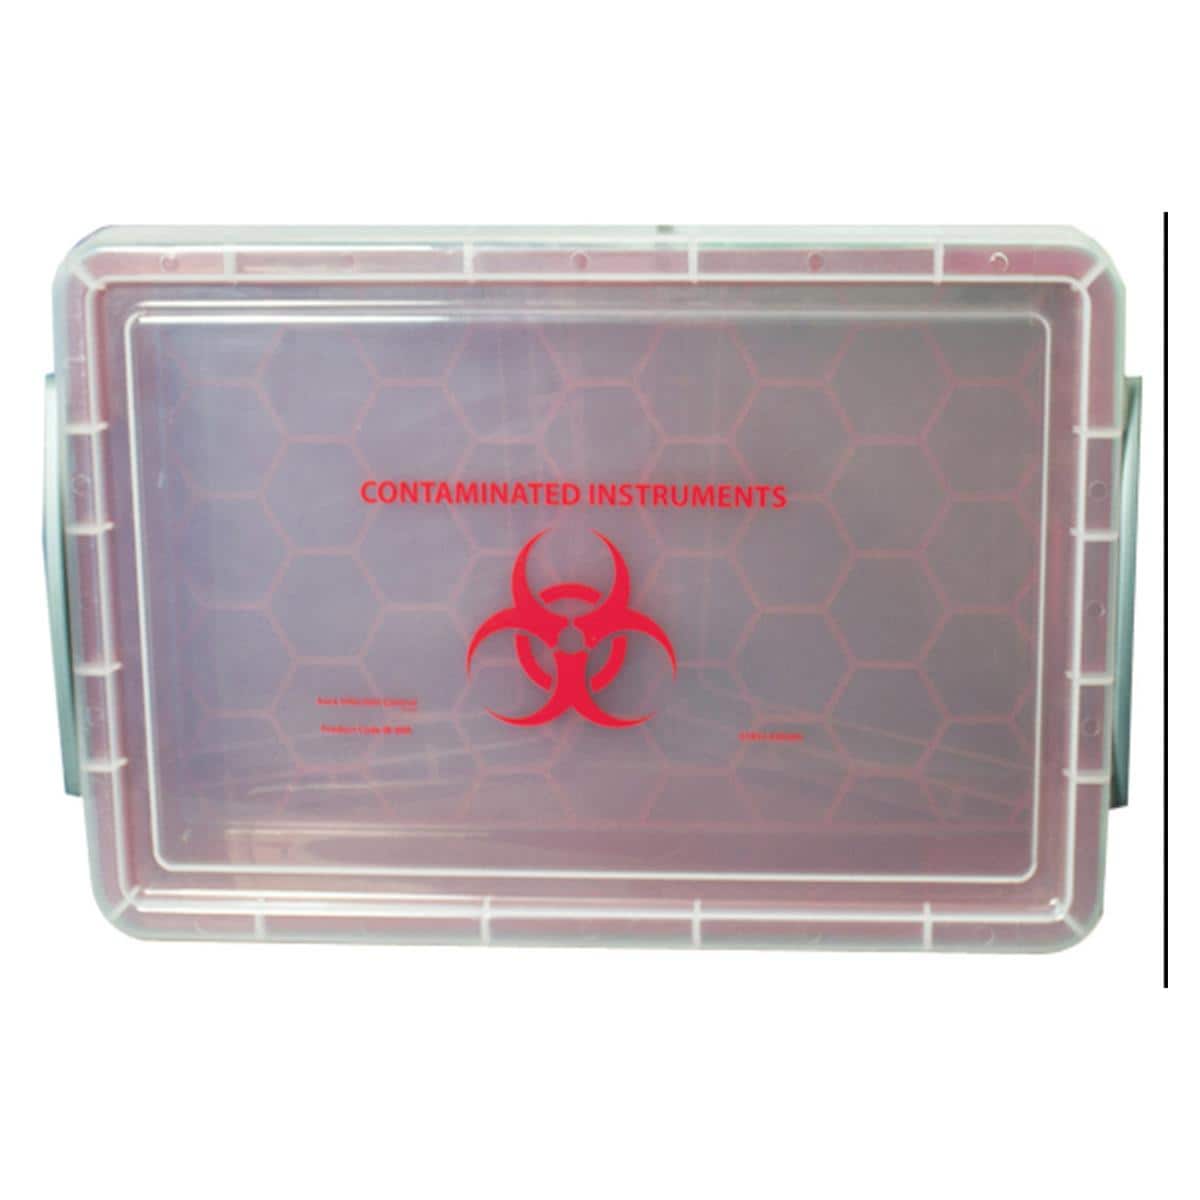 InstruBox Contaminated Instruments Red